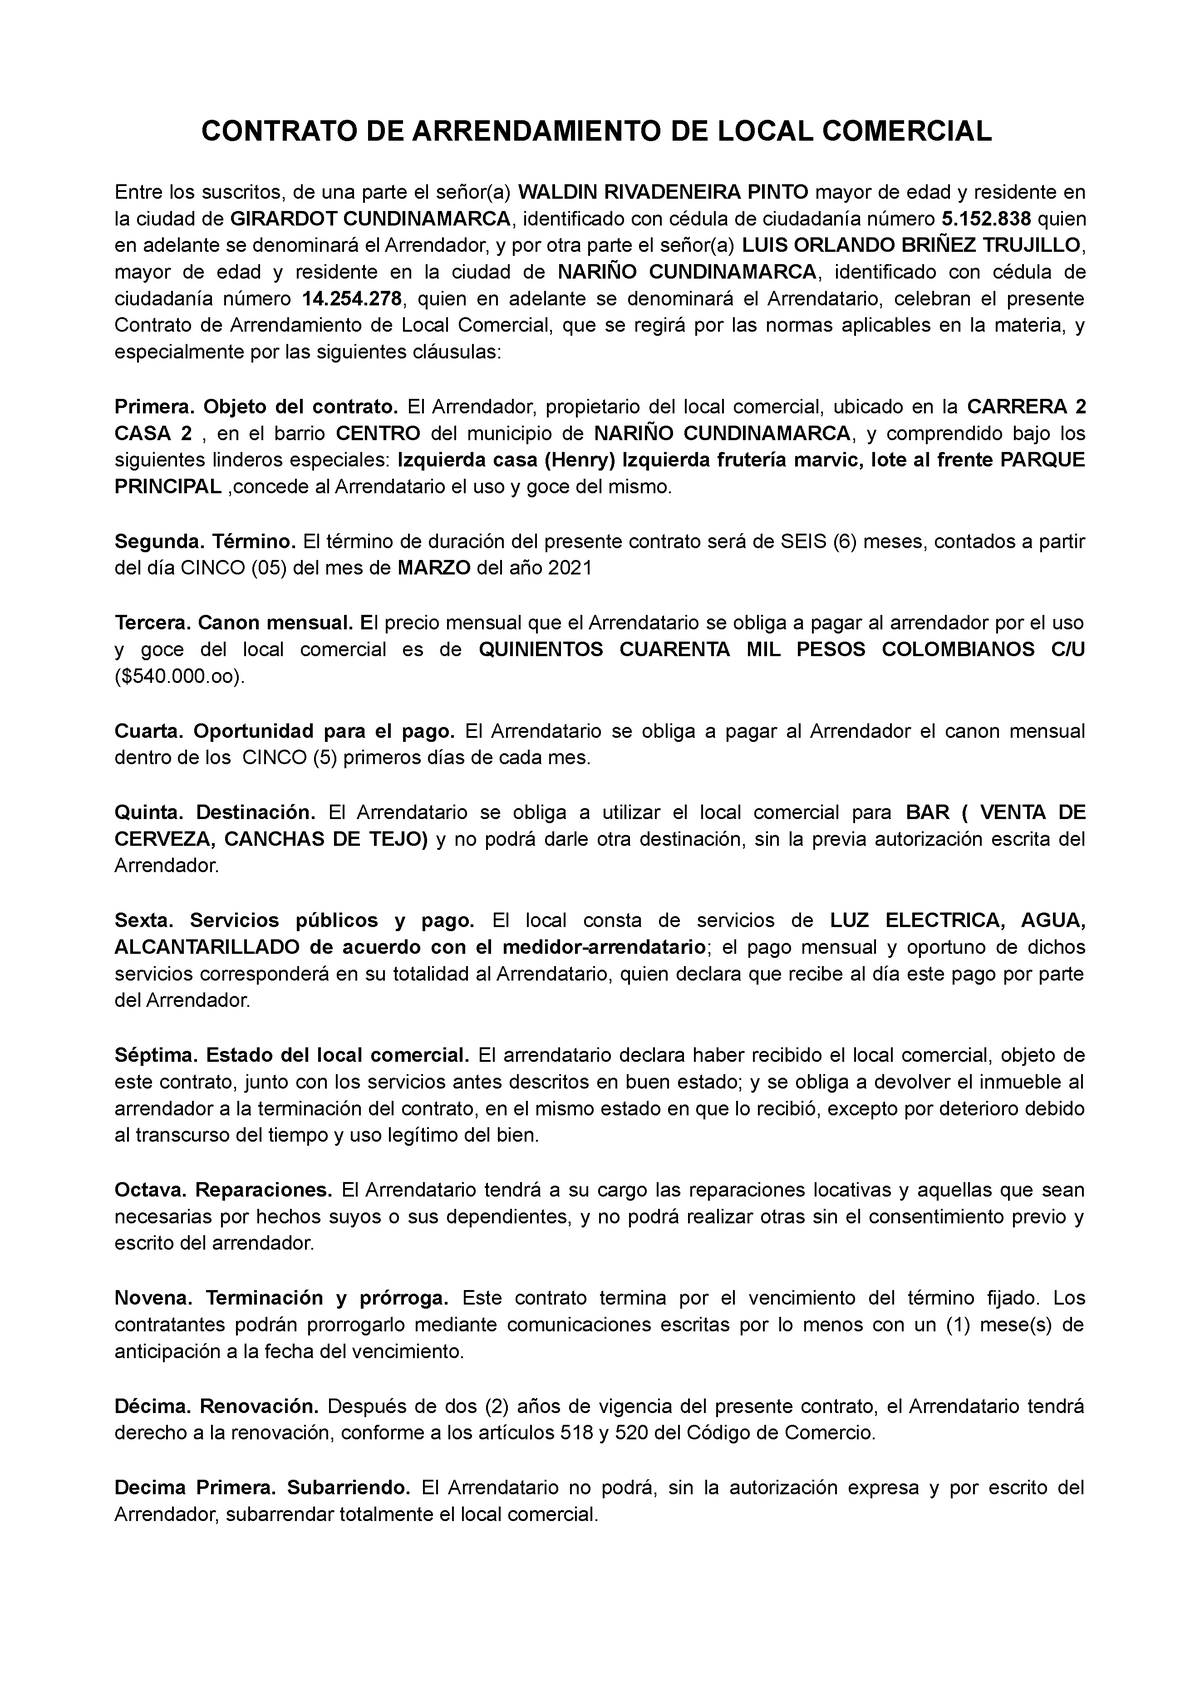 MODELO CONTRATO ARRENDAMIENTO UNIVERSIDASD C 2020 - CONTRATO DE  ARRENDAMIENTO DE LOCAL COMERCIAL - Studocu